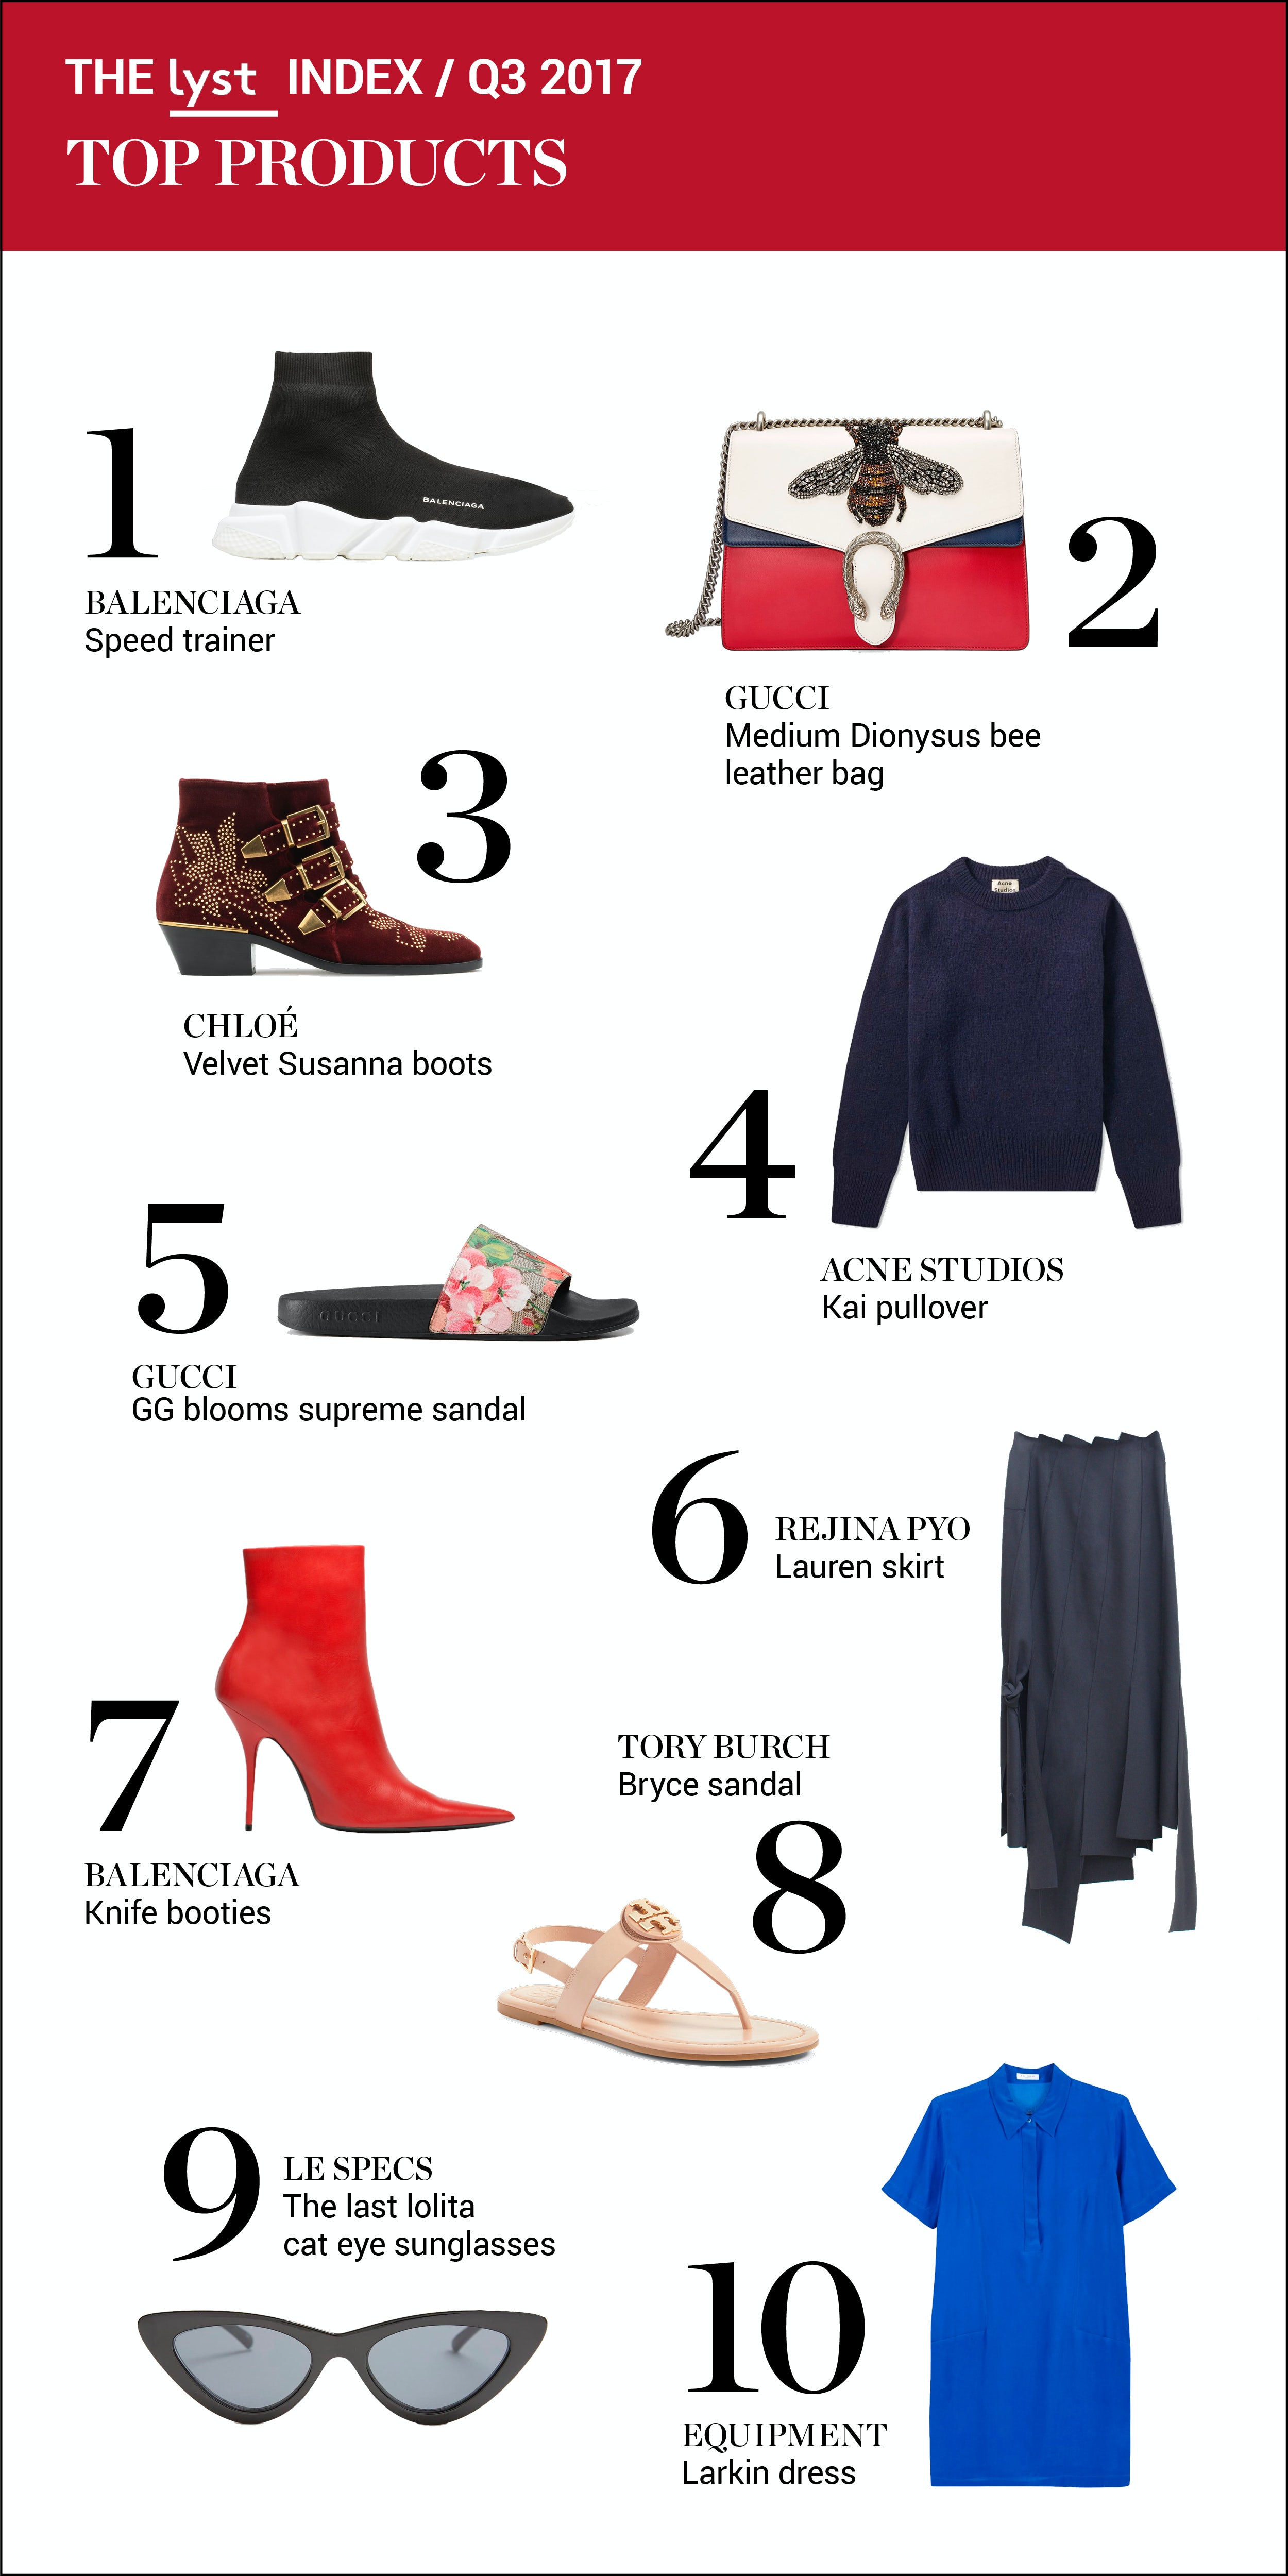 Lyst Index: Bottega Veneta Is the Most Searched Shoe – Footwear News